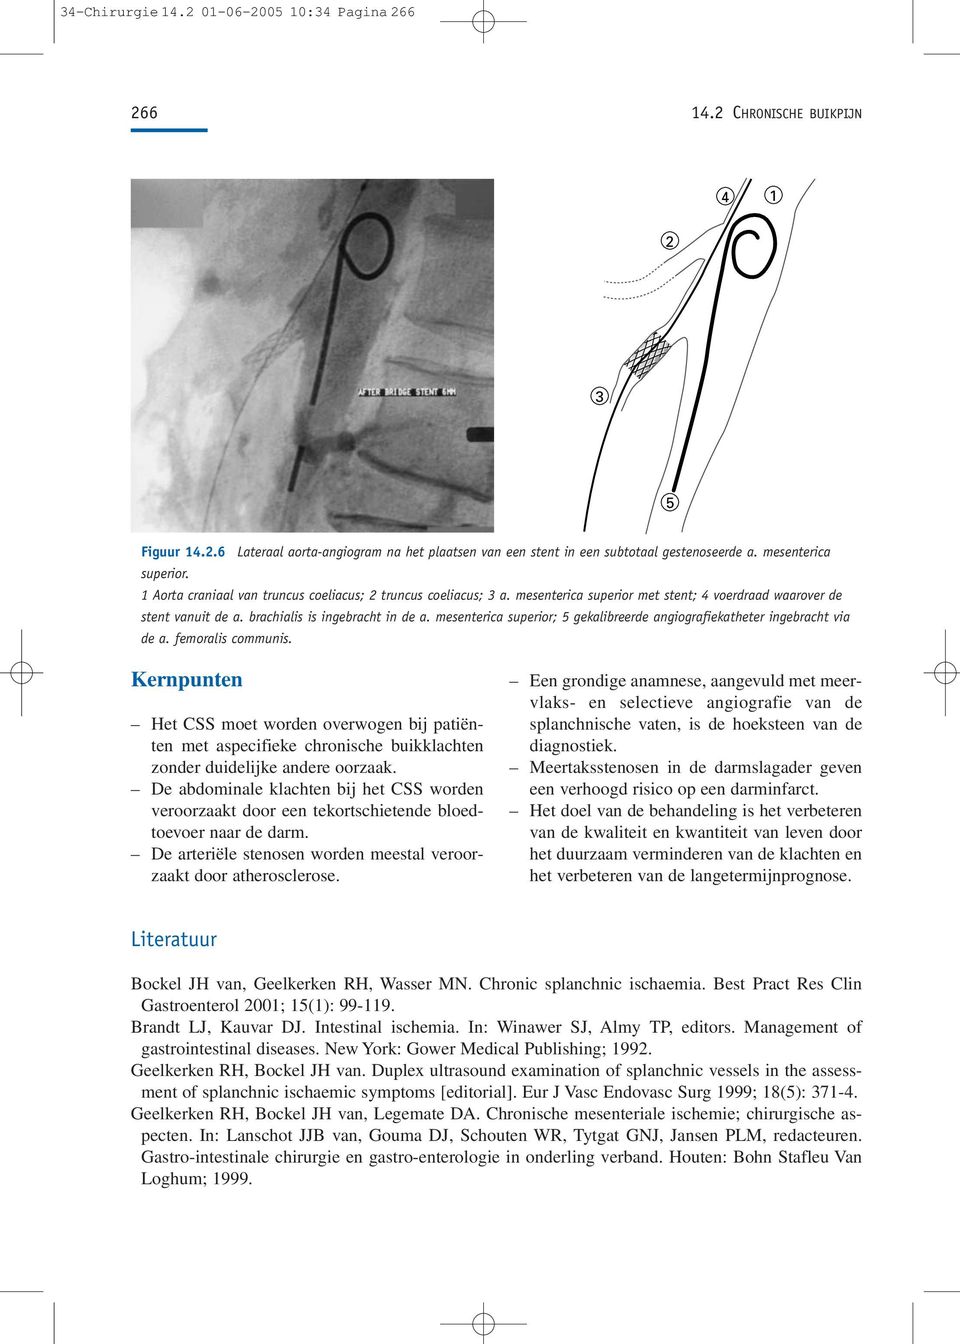 mesenterica superior; 5 gekalibreerde angiografiekatheter ingebracht via de a. femoralis communis.